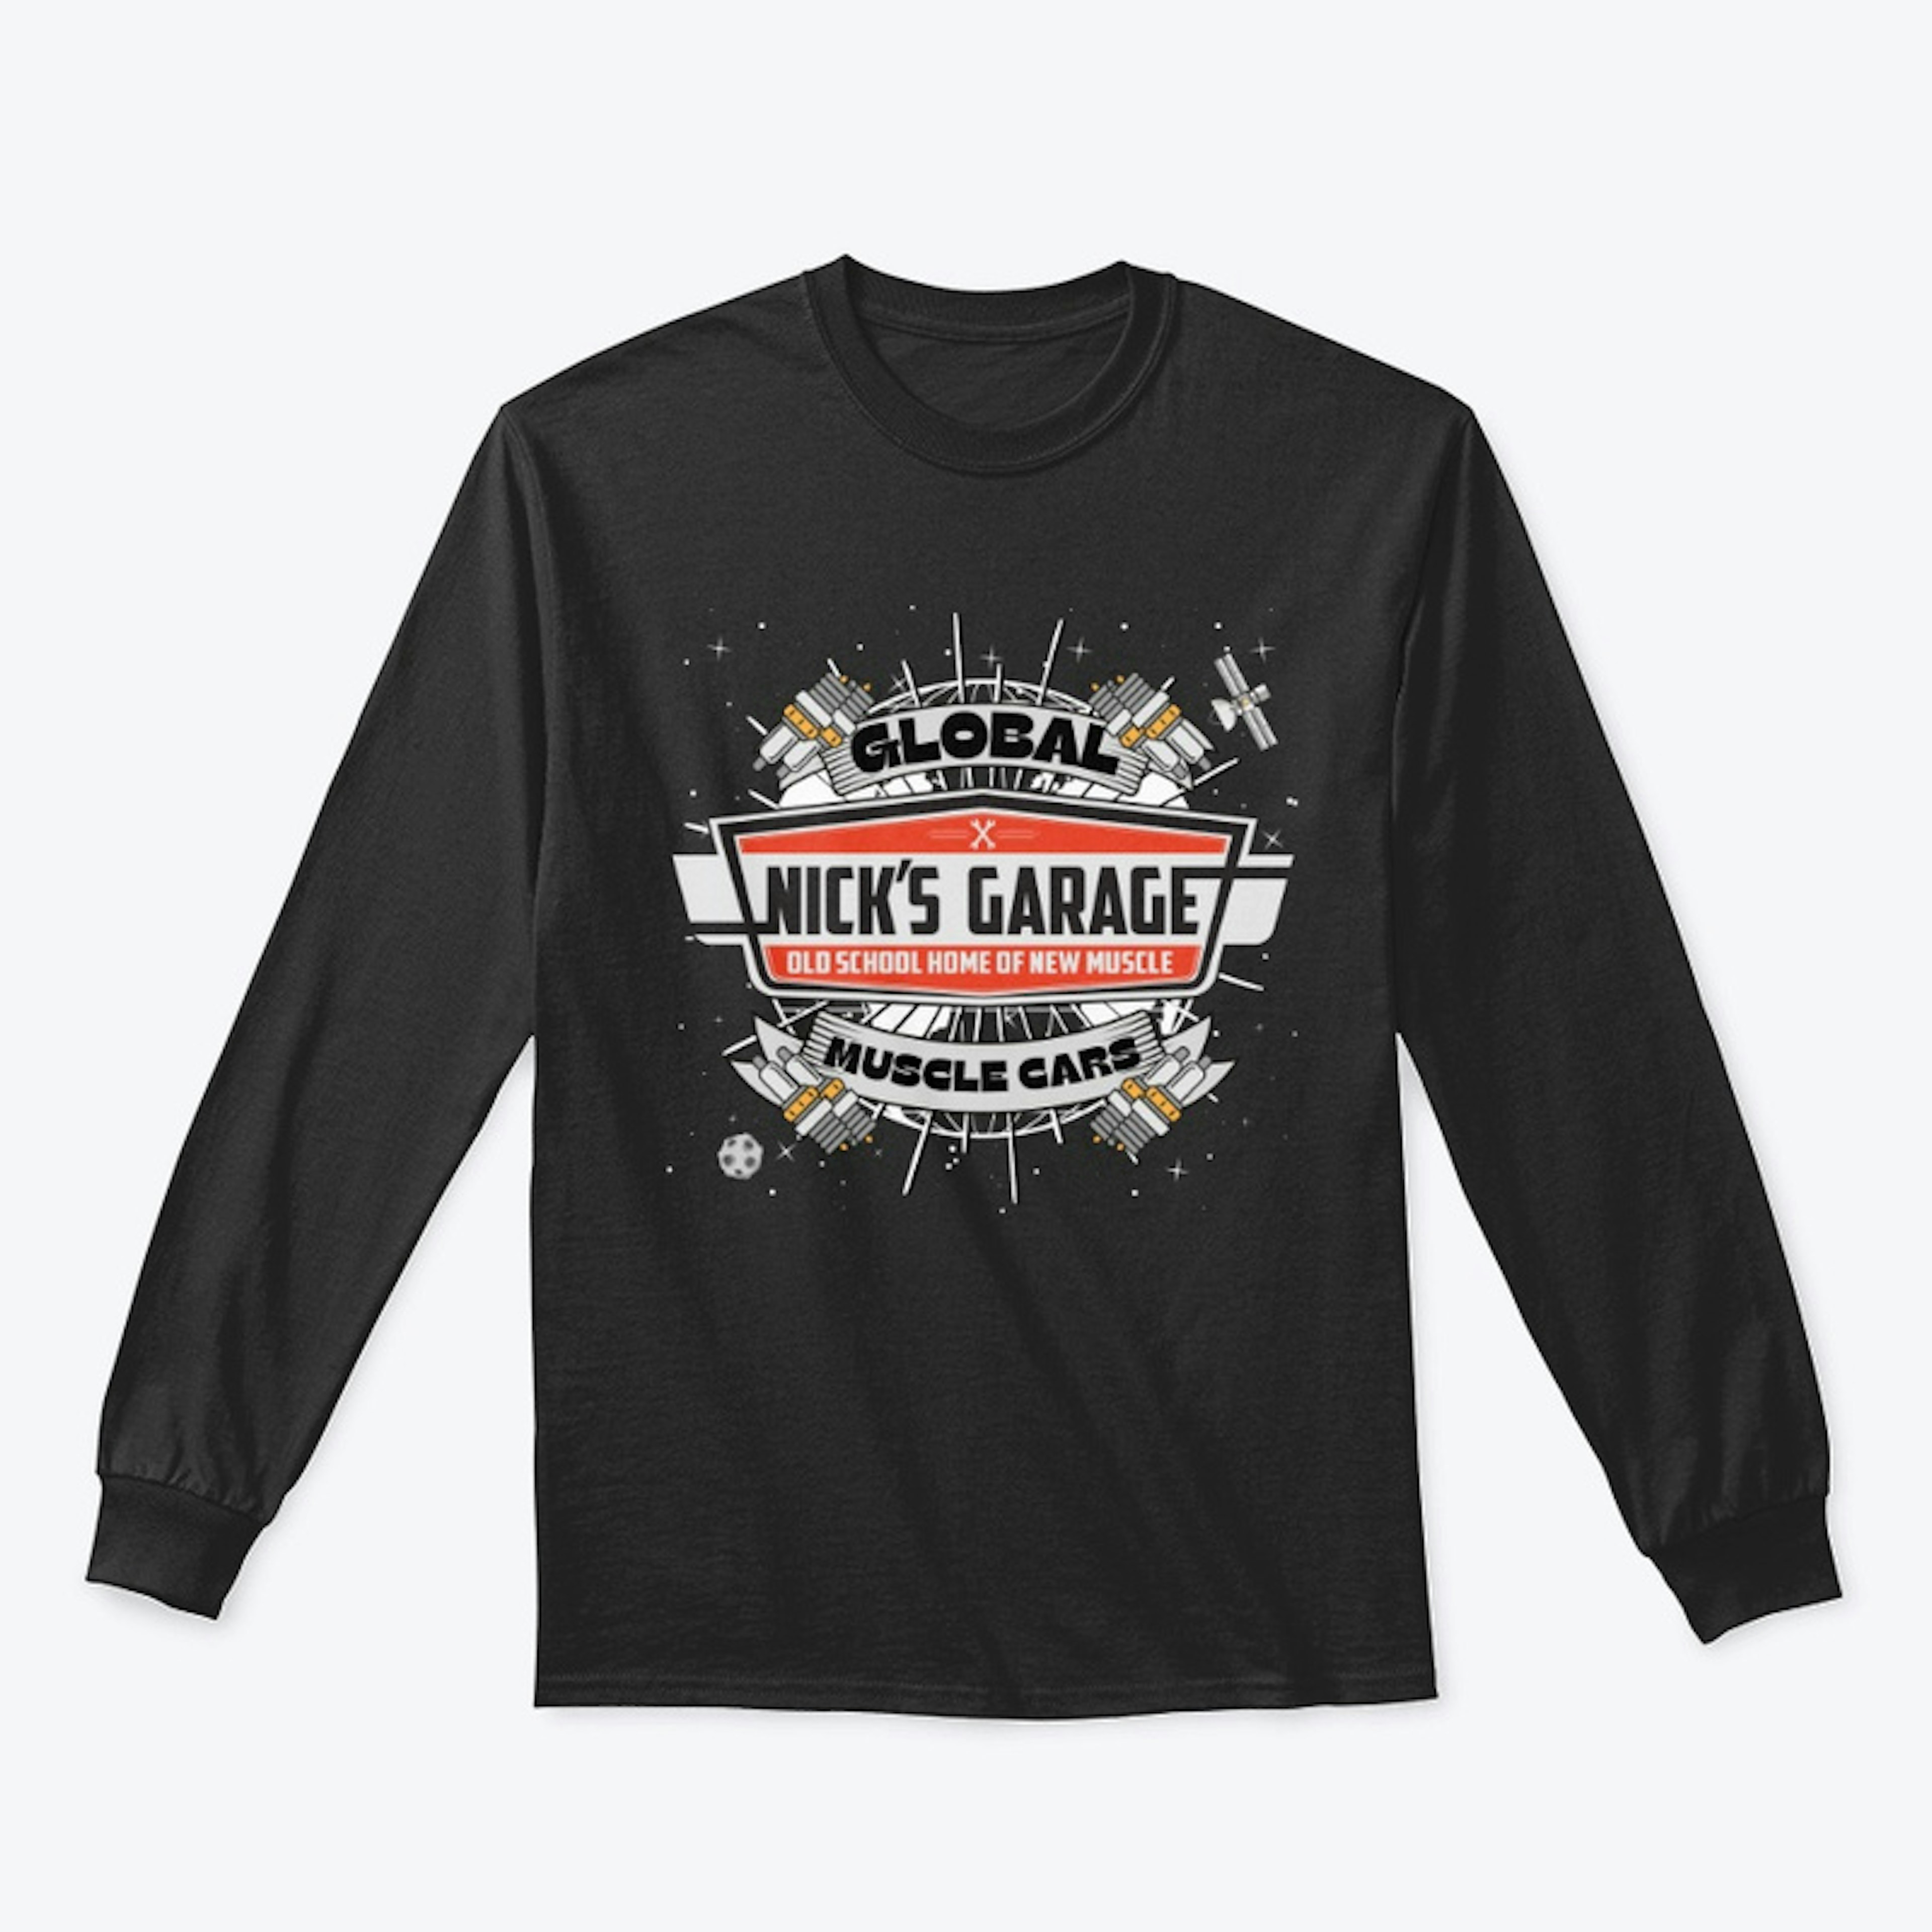 Nick's Garage Global Muscle Cars